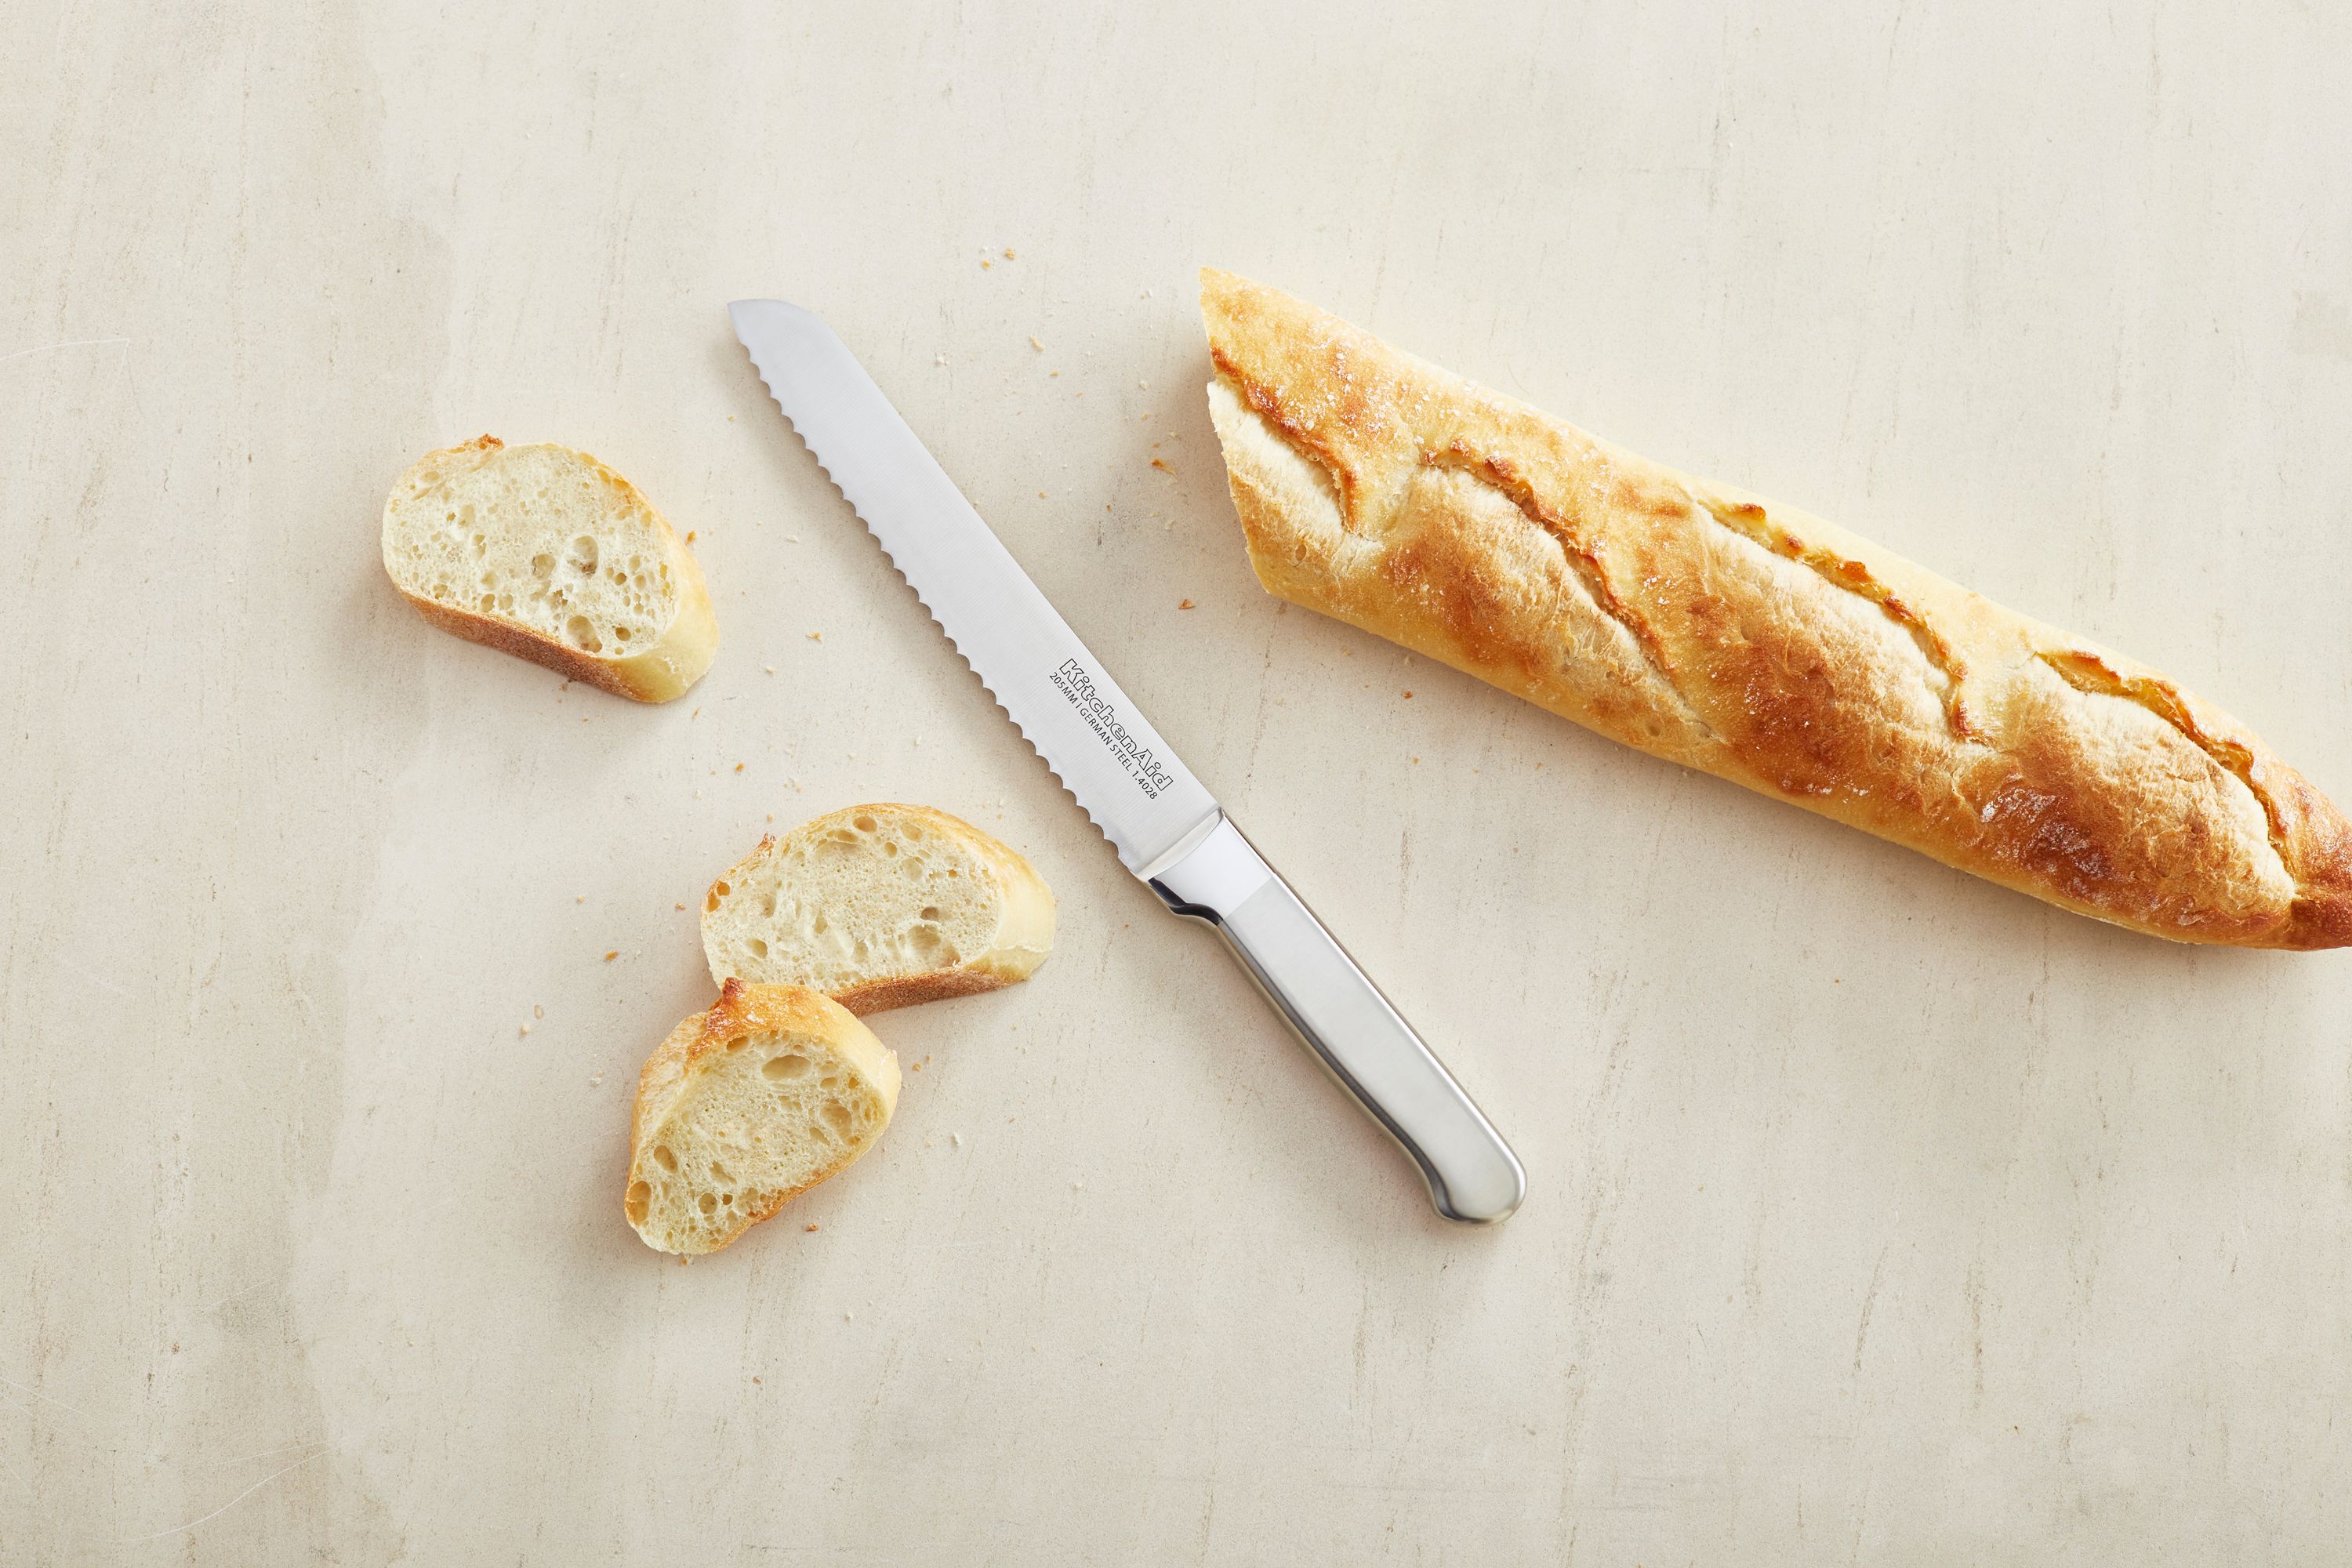 KitchenAid Classic 6 Ceramic Bread Knife with Sheath - 20864607